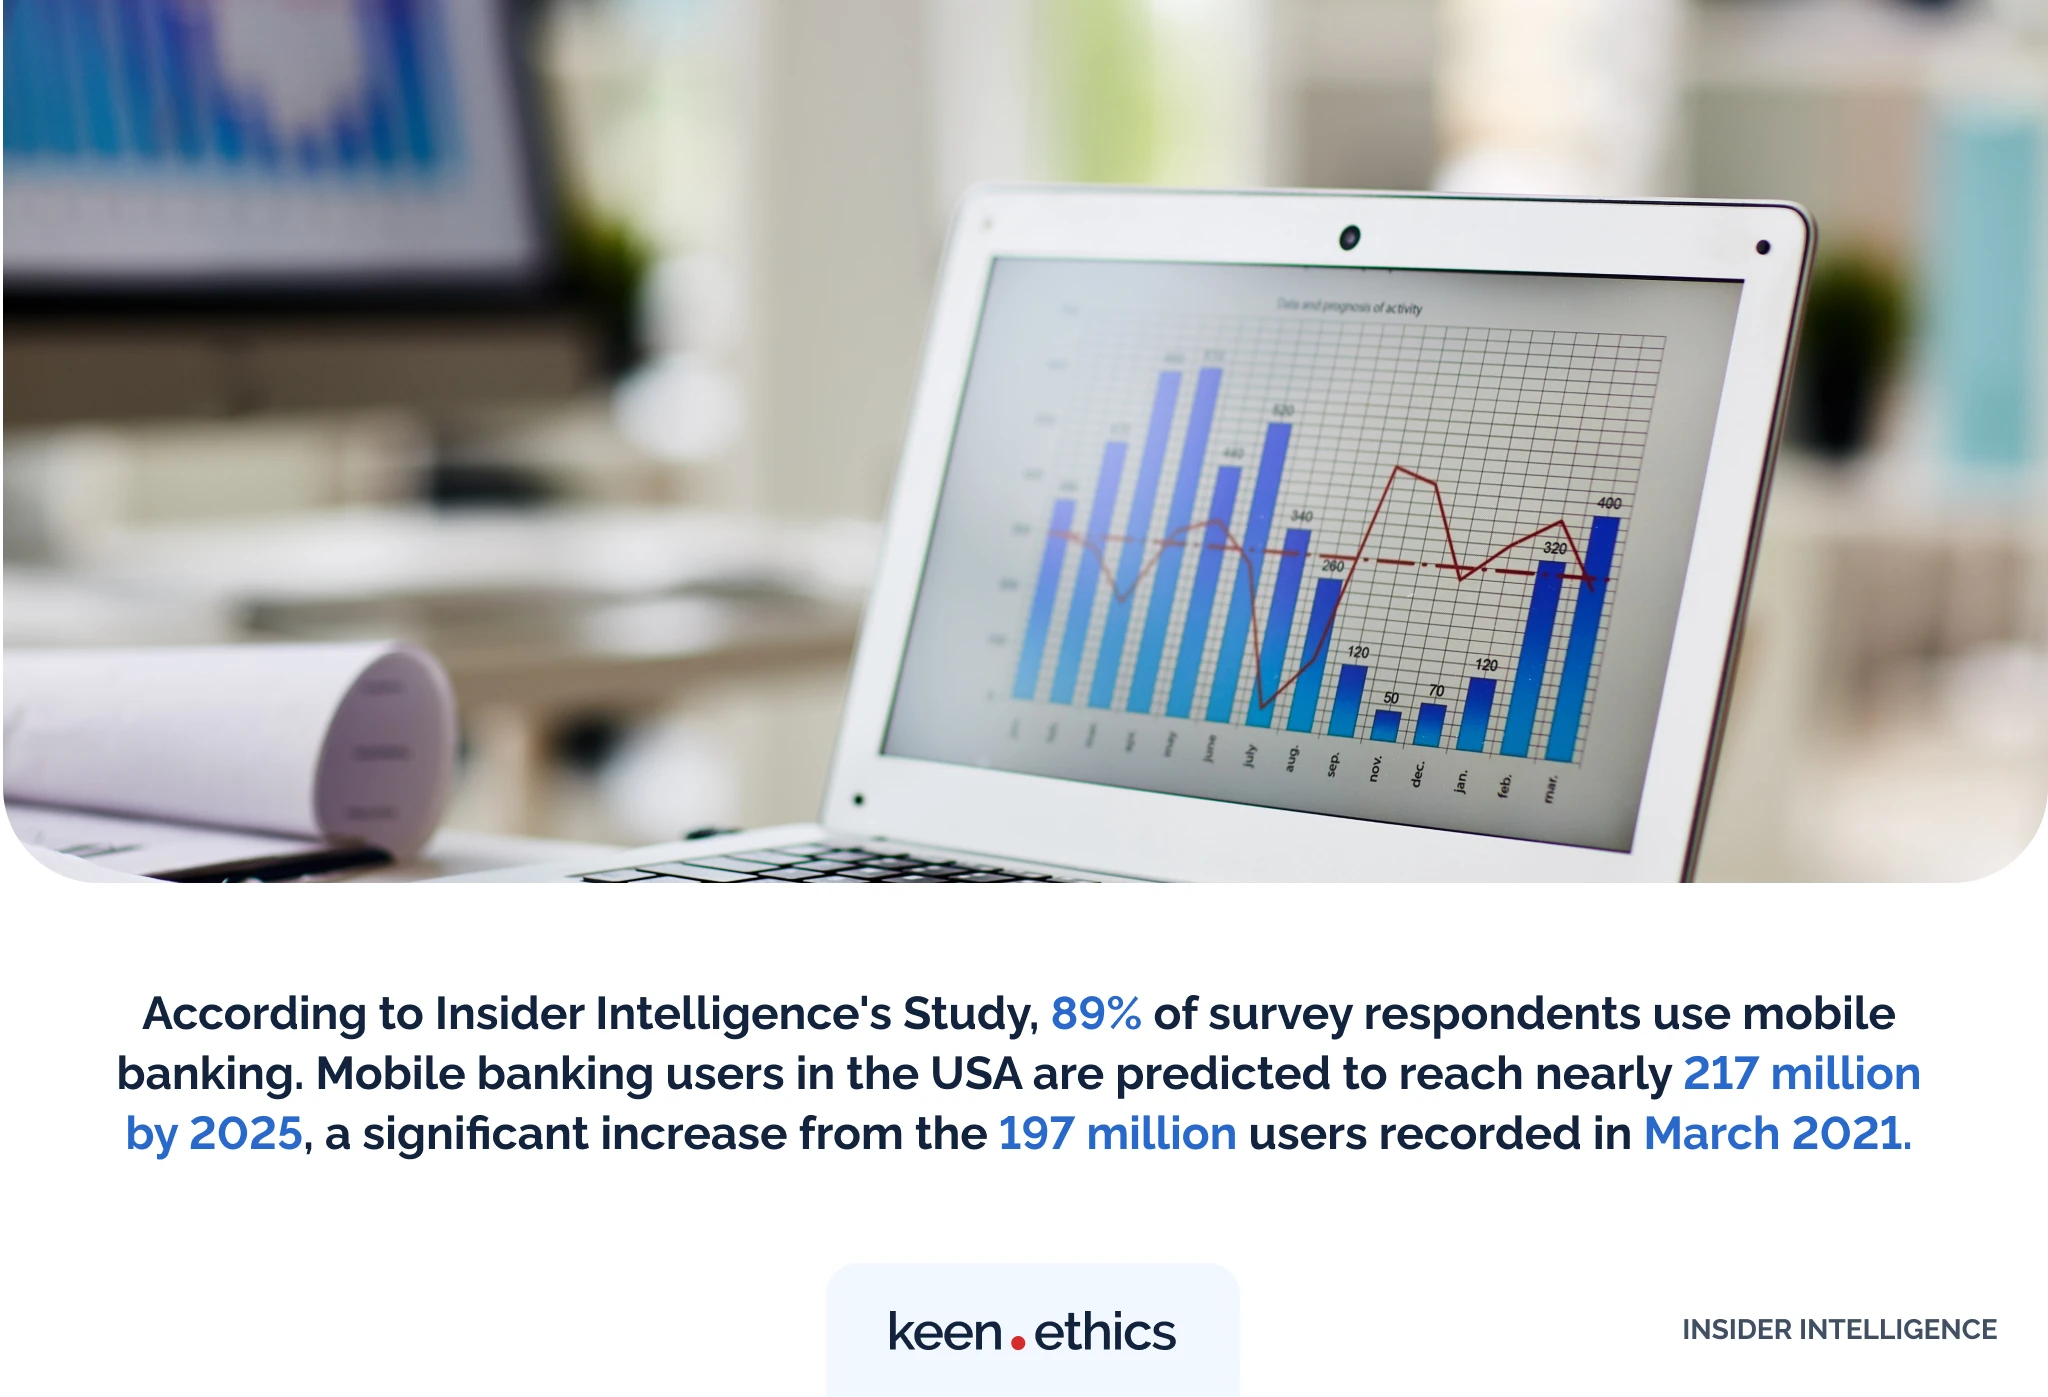 Statistics on mobile banking